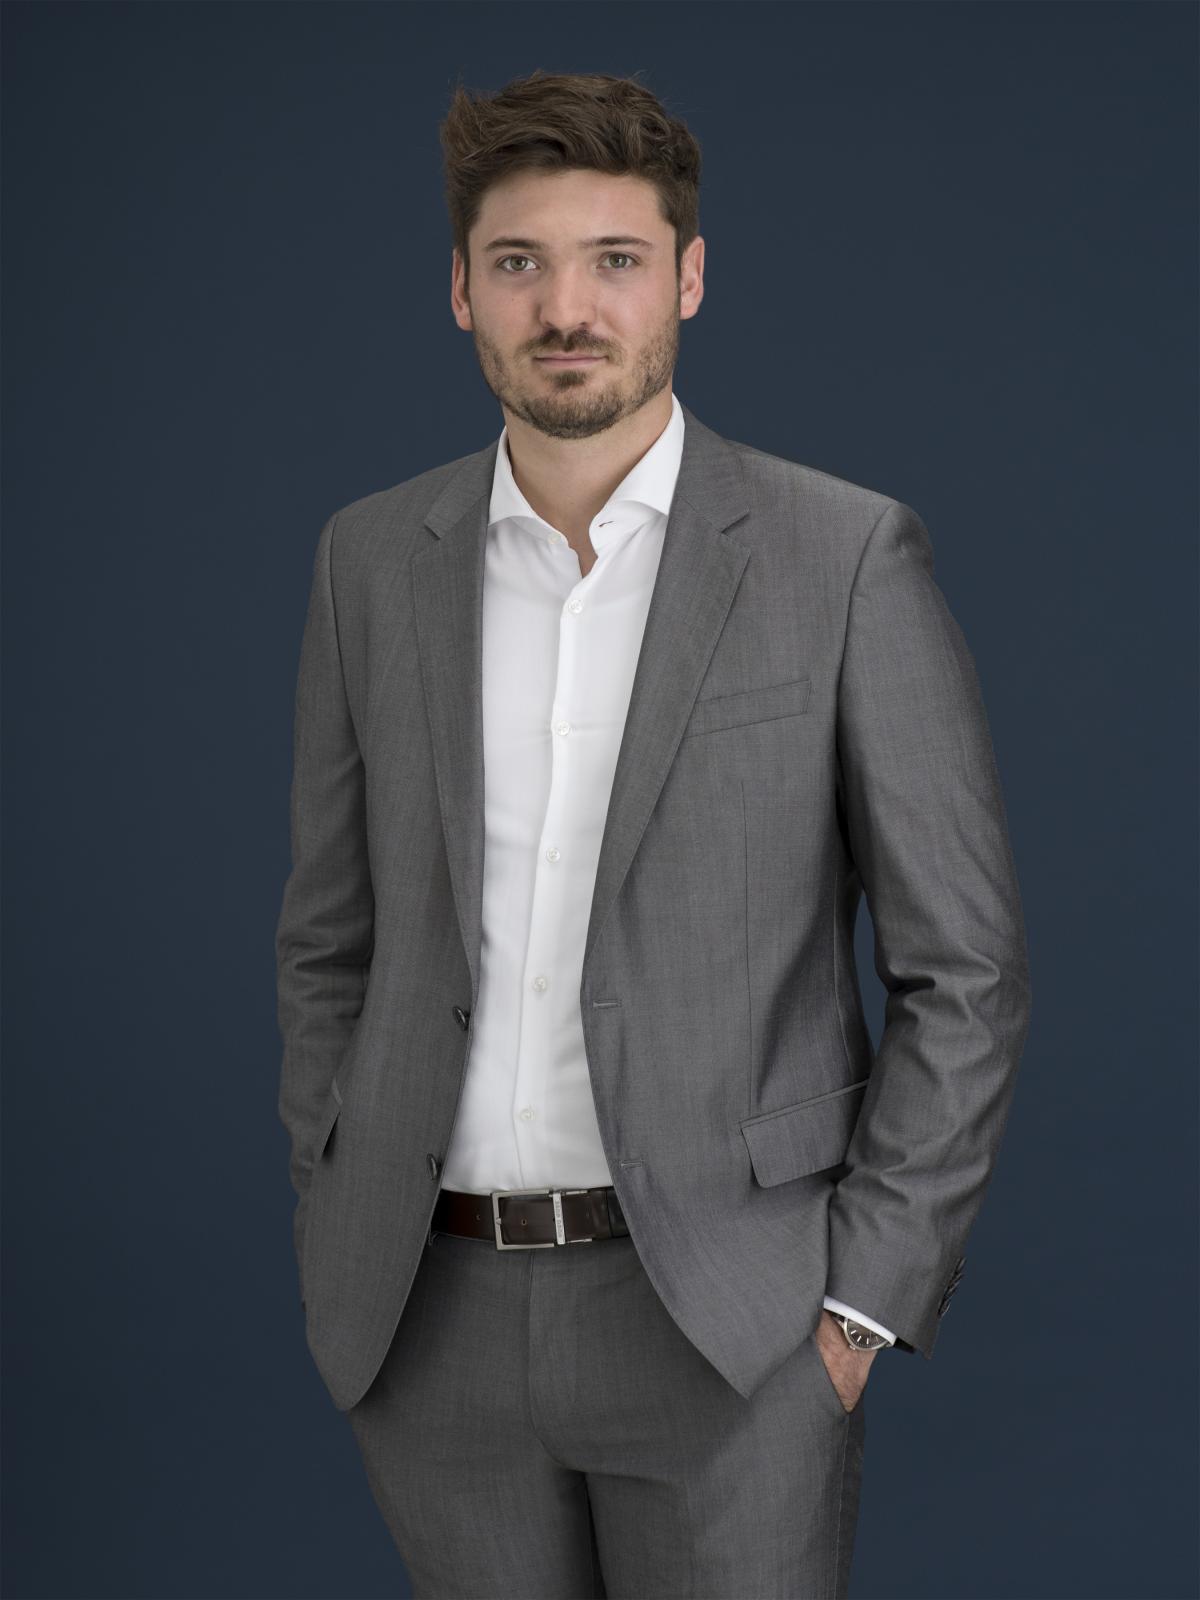 Daniel Cornaz - Rechtsanwalt in Zürich - Rechtsanwalt